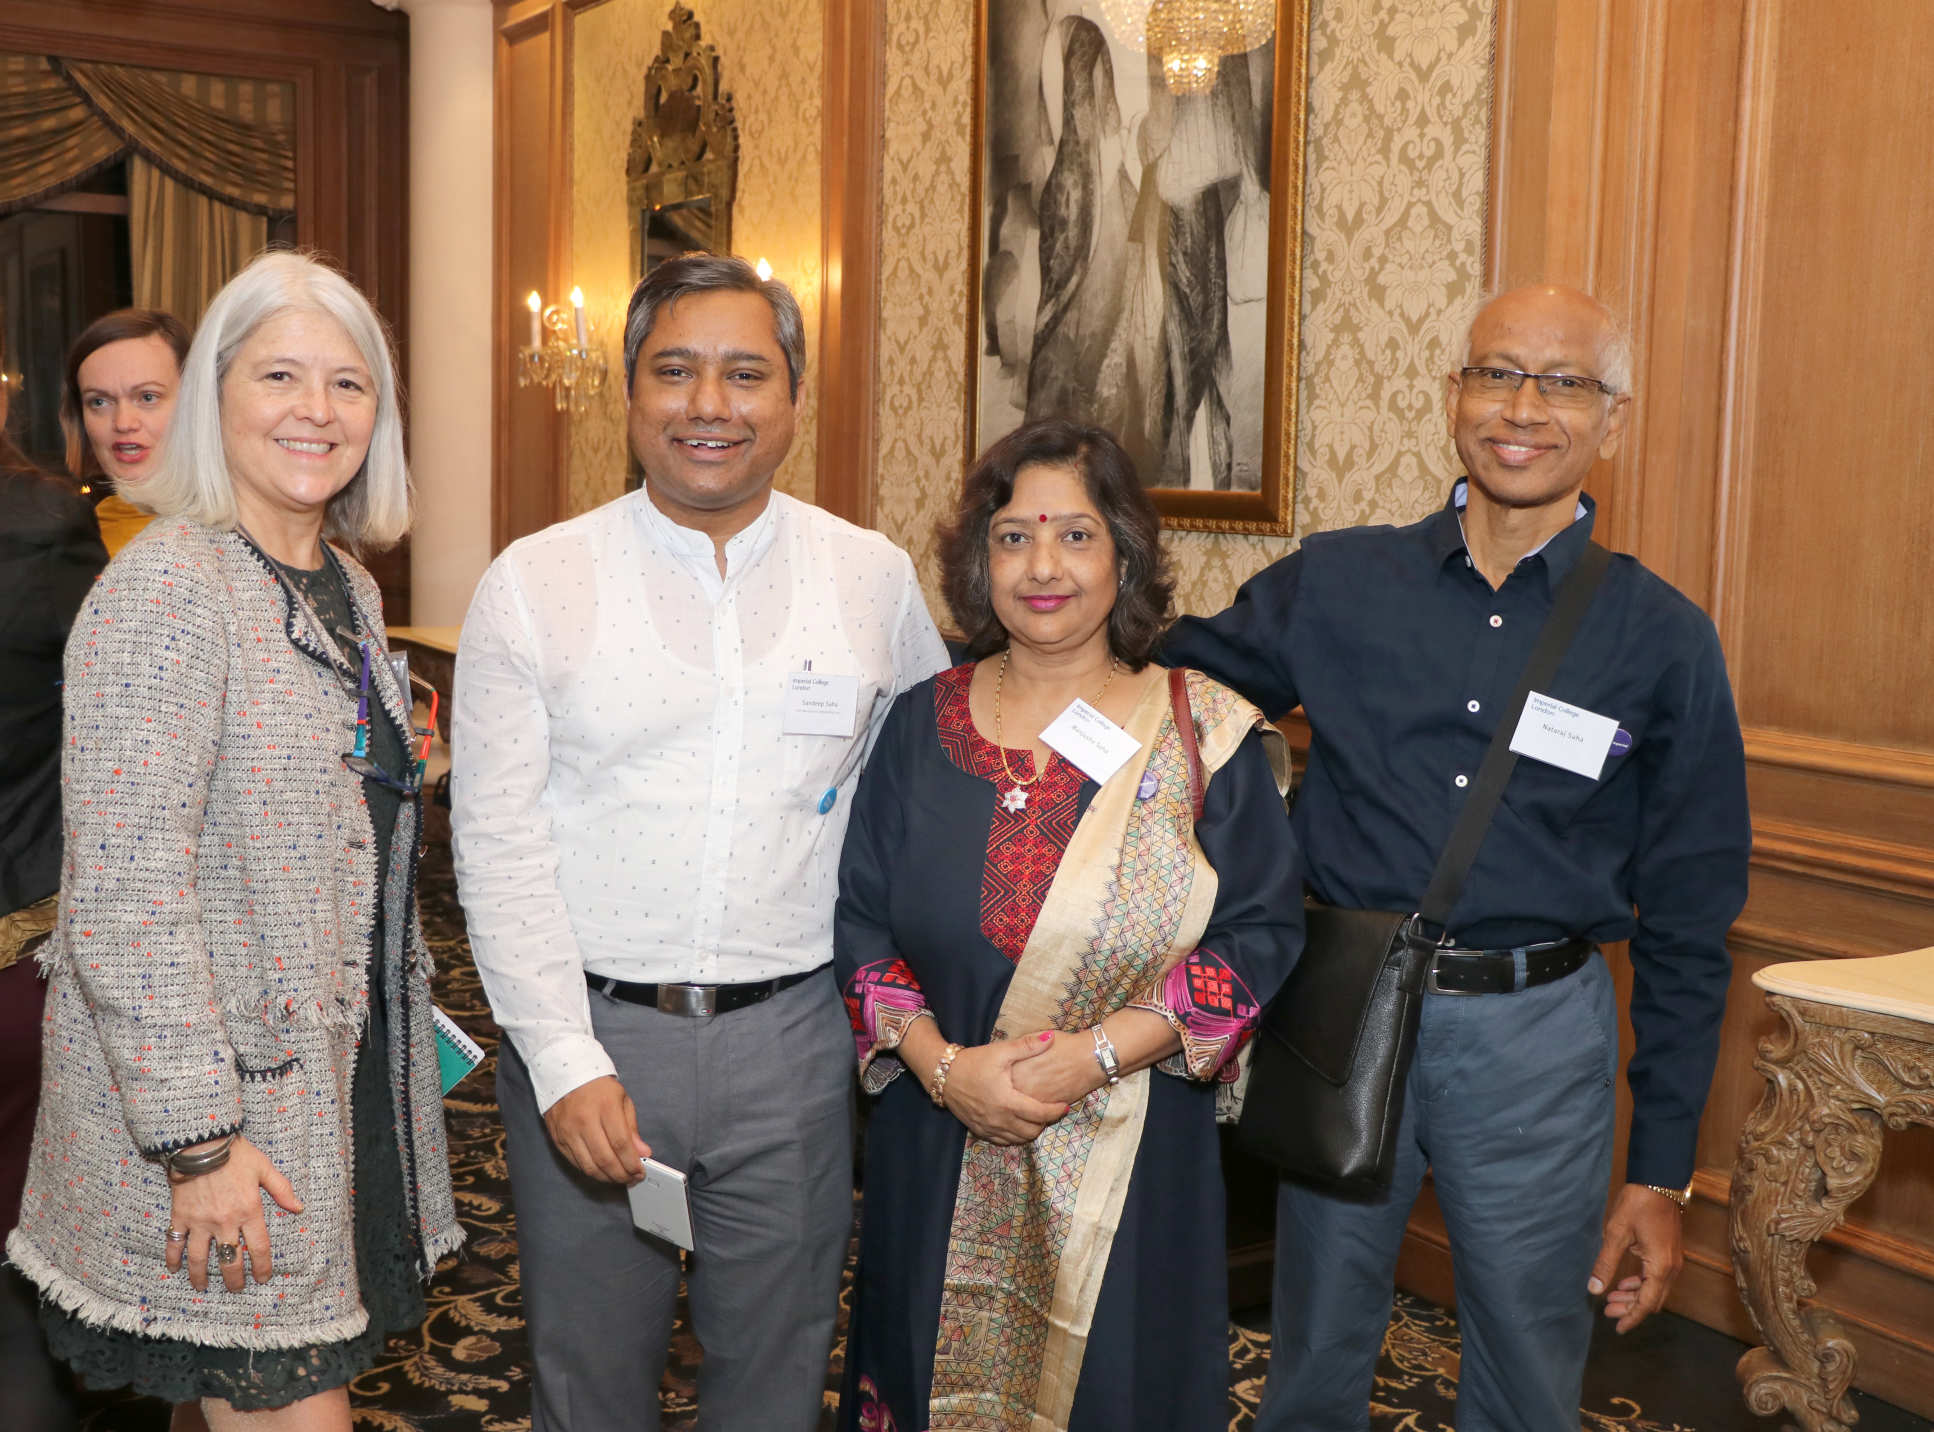 Alumnus Sandeep Saha with his parents and Nicola Pogson, Director of Alumni Relations